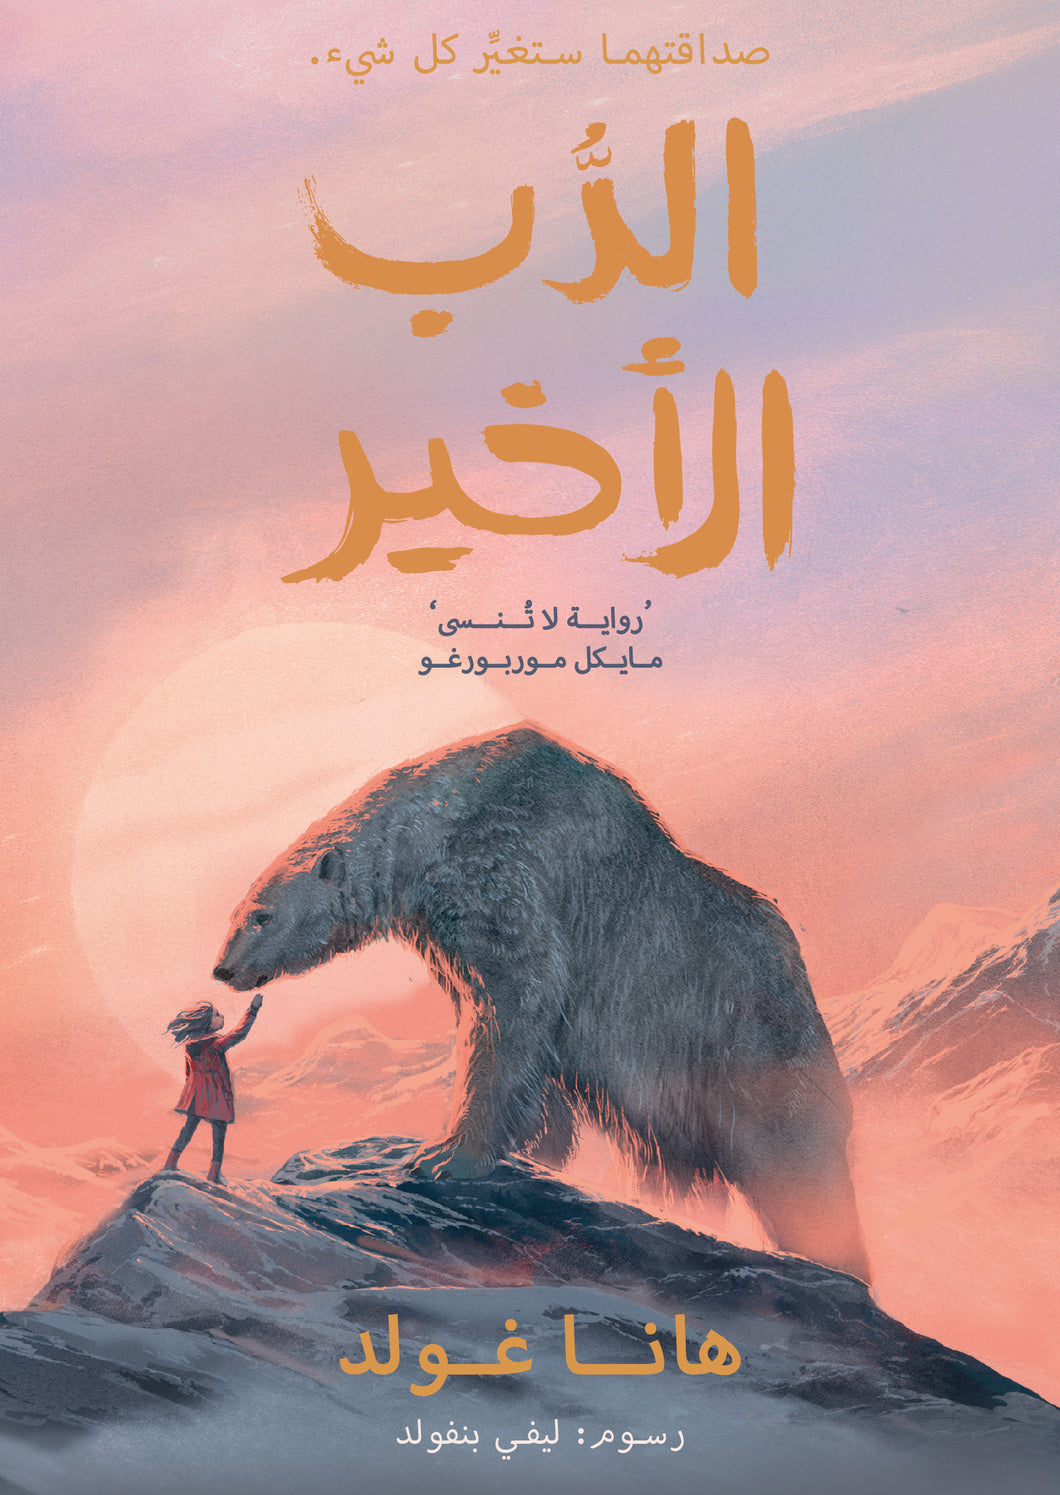 رواية الدب الأخير  the last bear translated into Arabic for the first time 